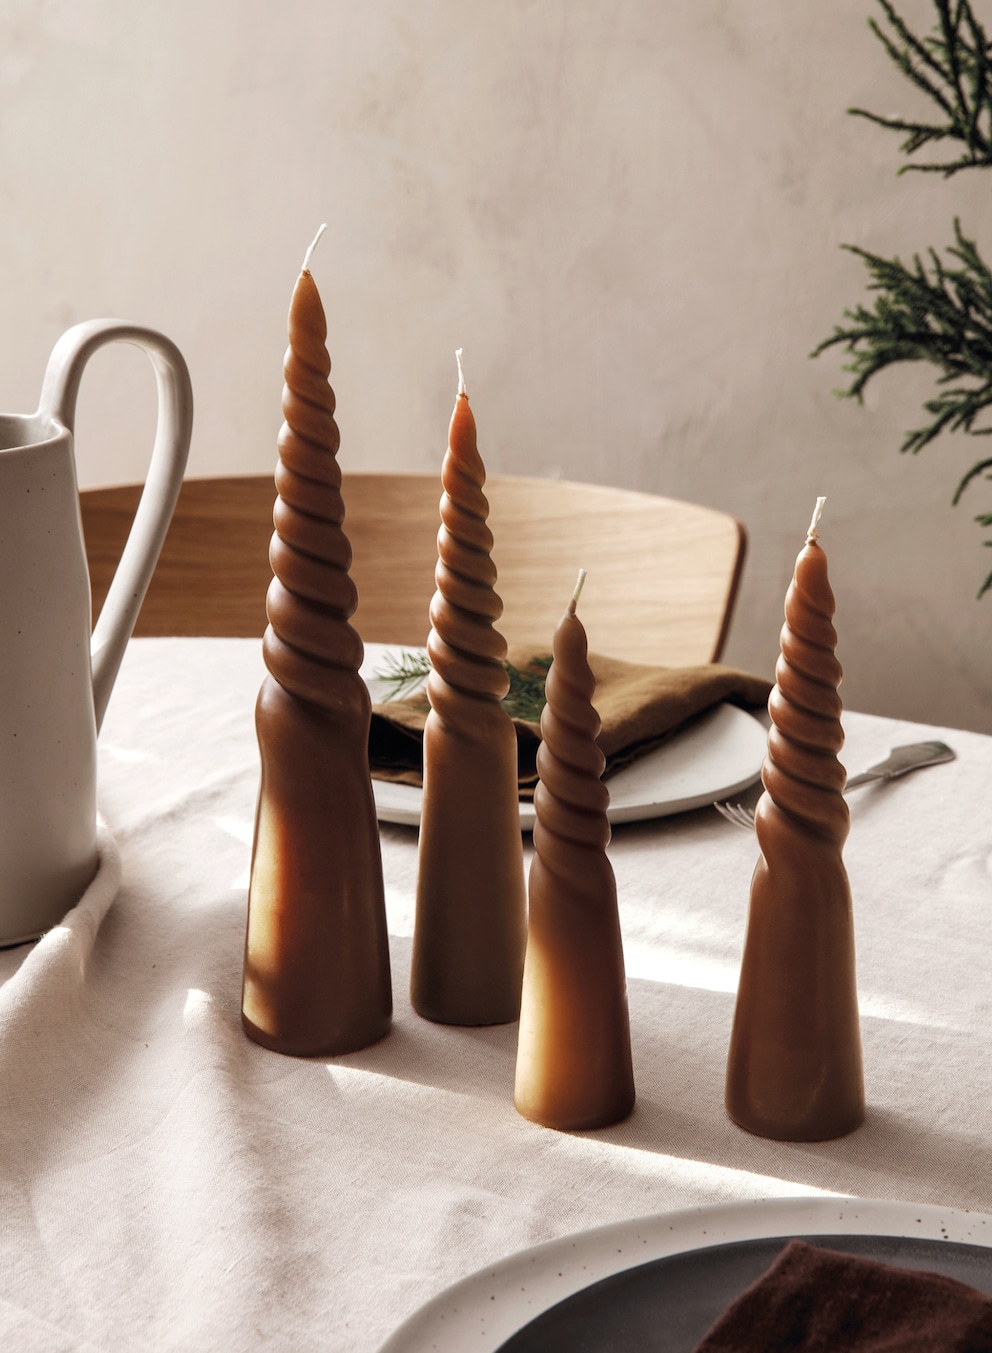 Twist candles transform simple arrangements into something quite special. Image: Ferm Living